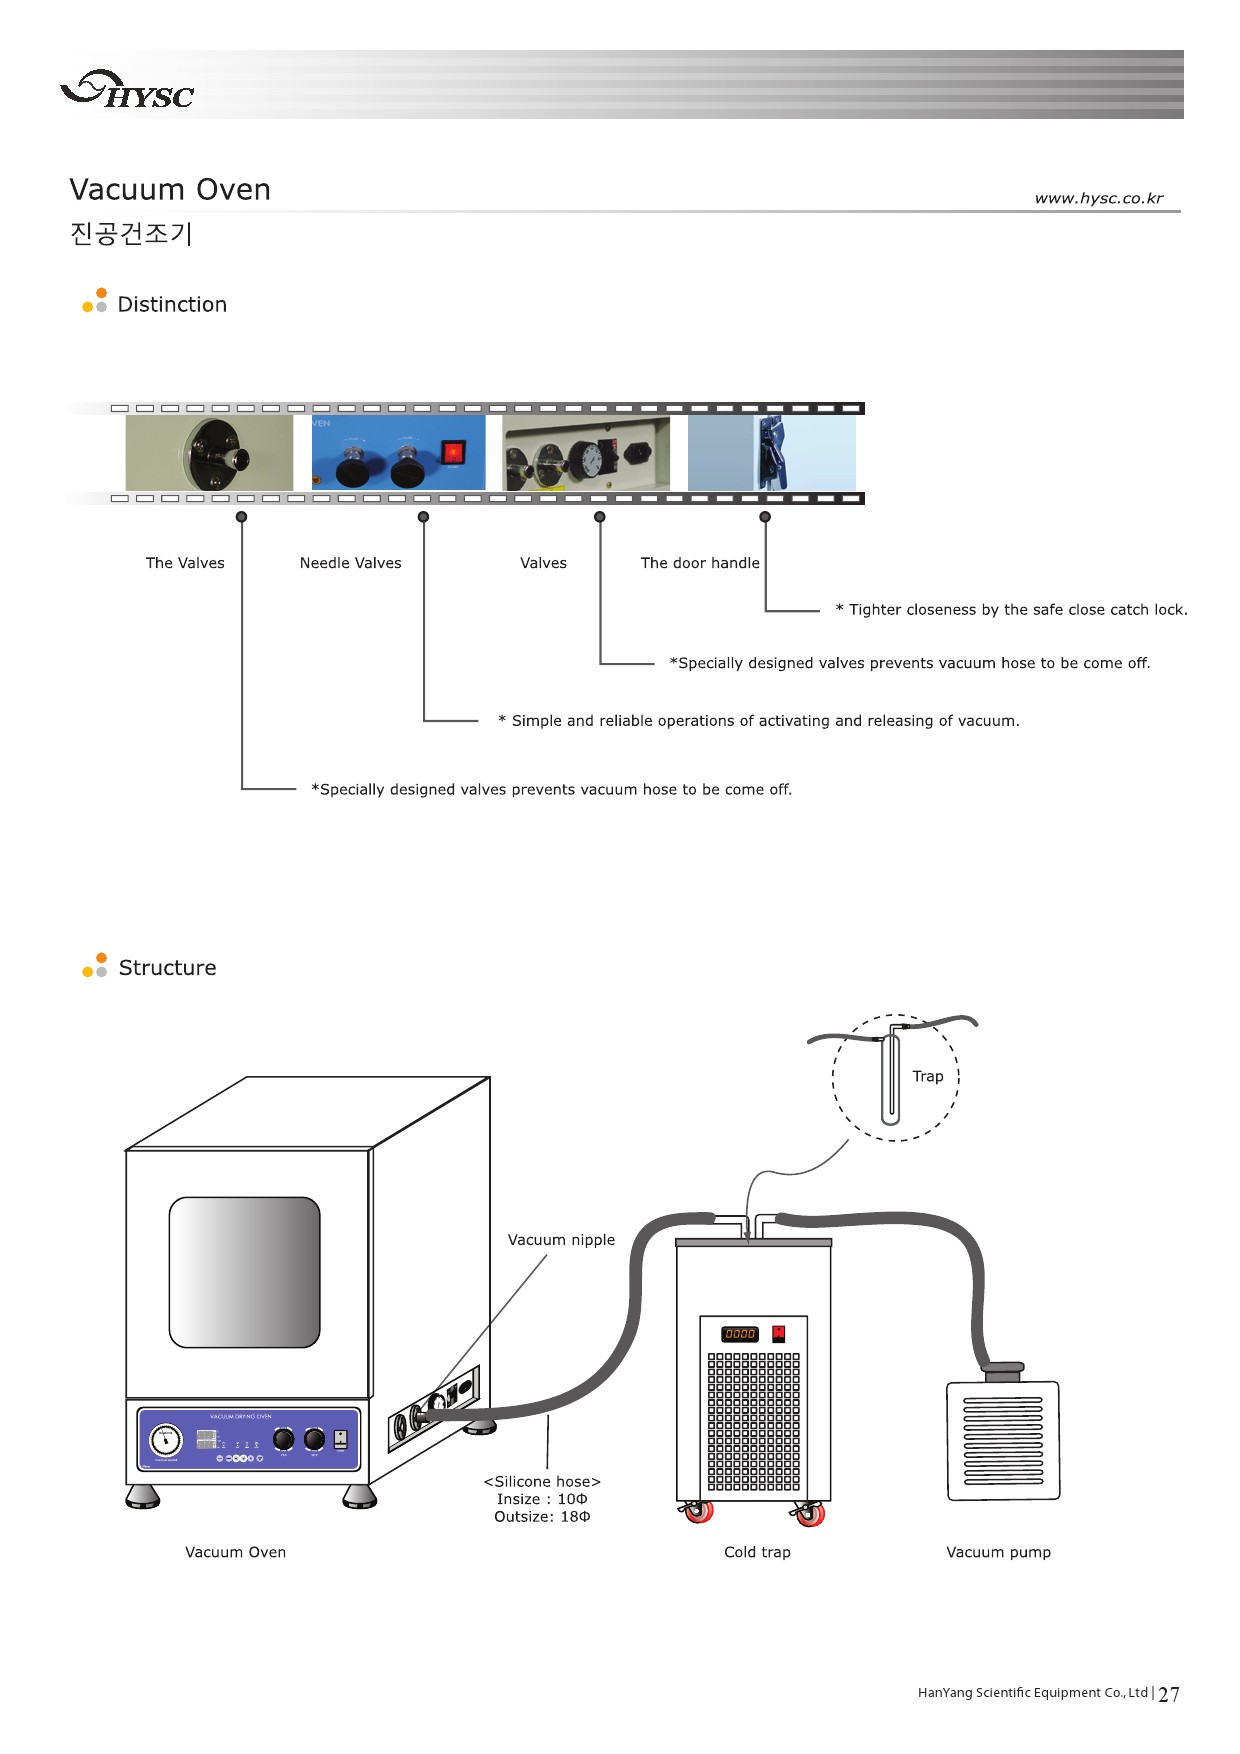 HYSC_Introduction_Vacuum Oven-2.jpg